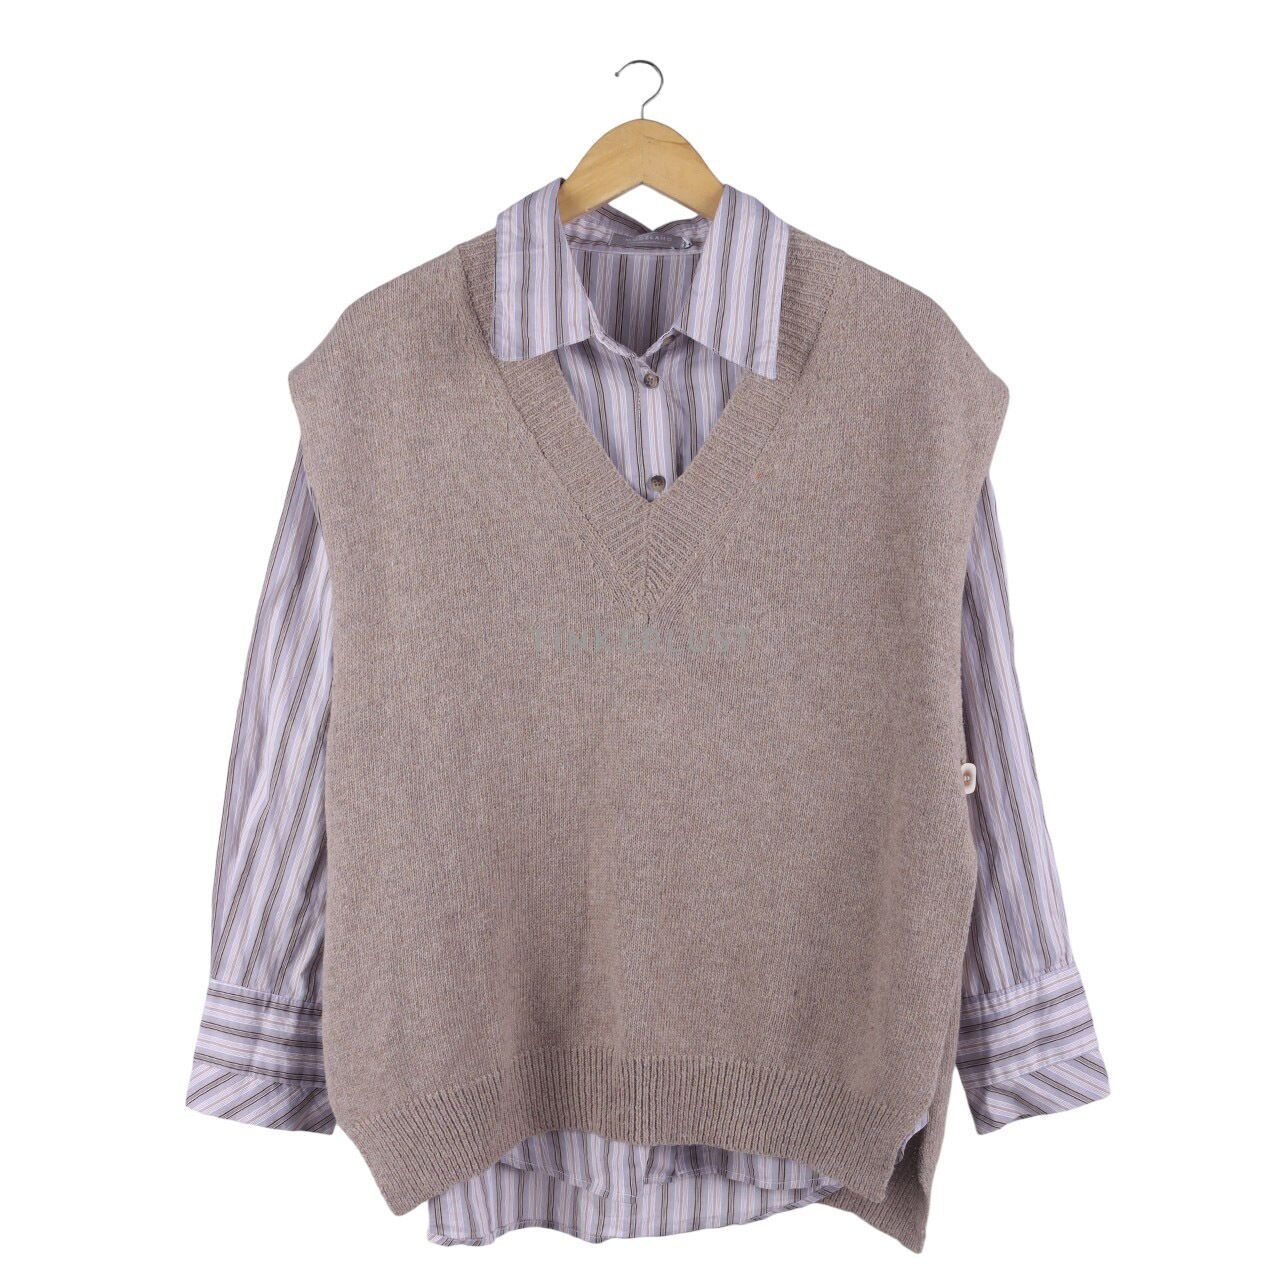 Modelano Grey & Brown Stripes Shirt with Vest